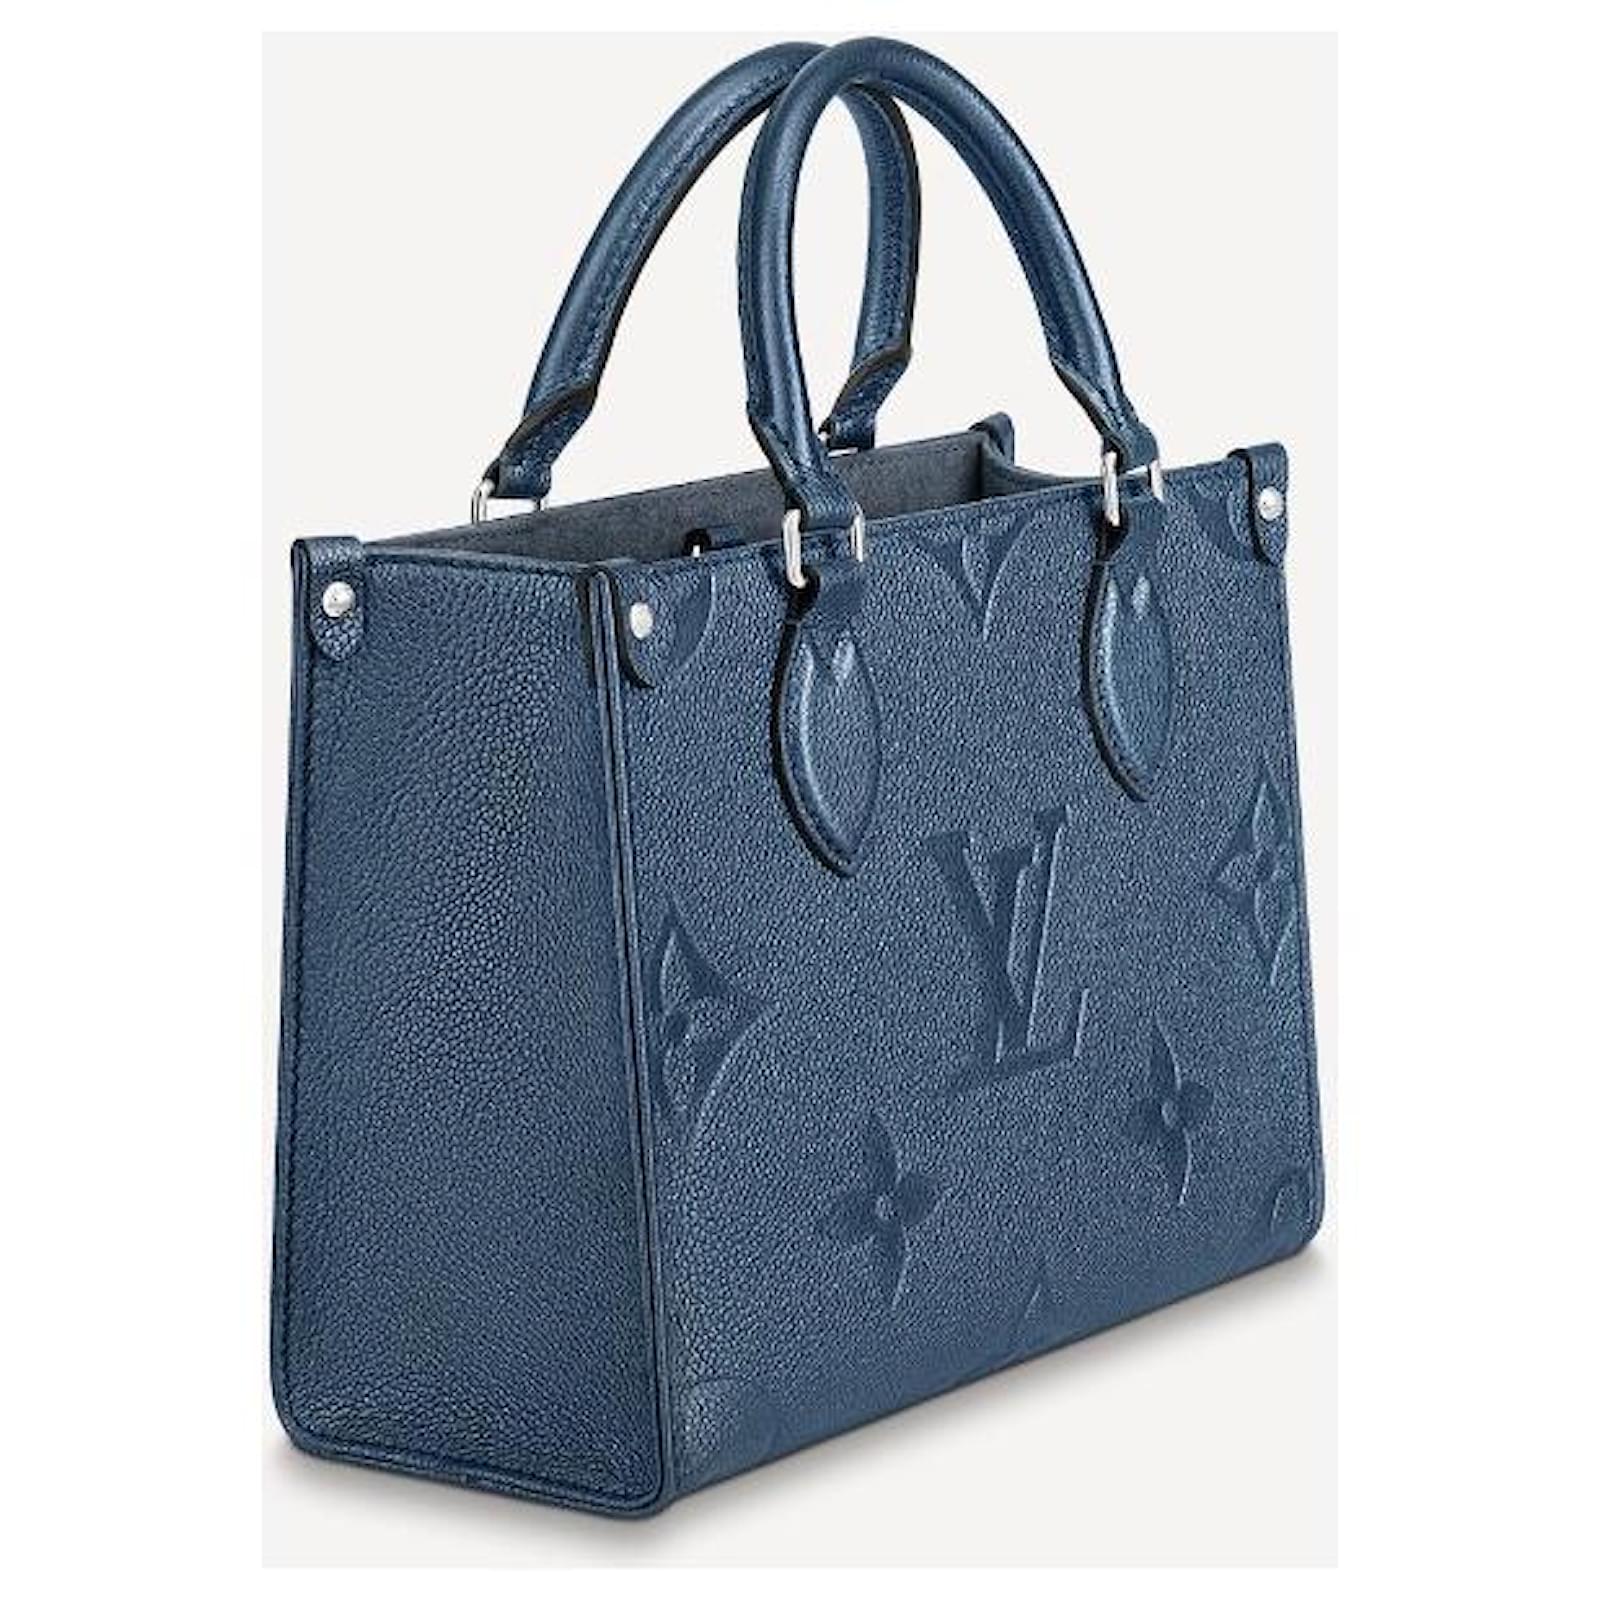 Buy LOUIS VUITTON Brooks Tote Bag Navy Blue [M58846] Online - Best